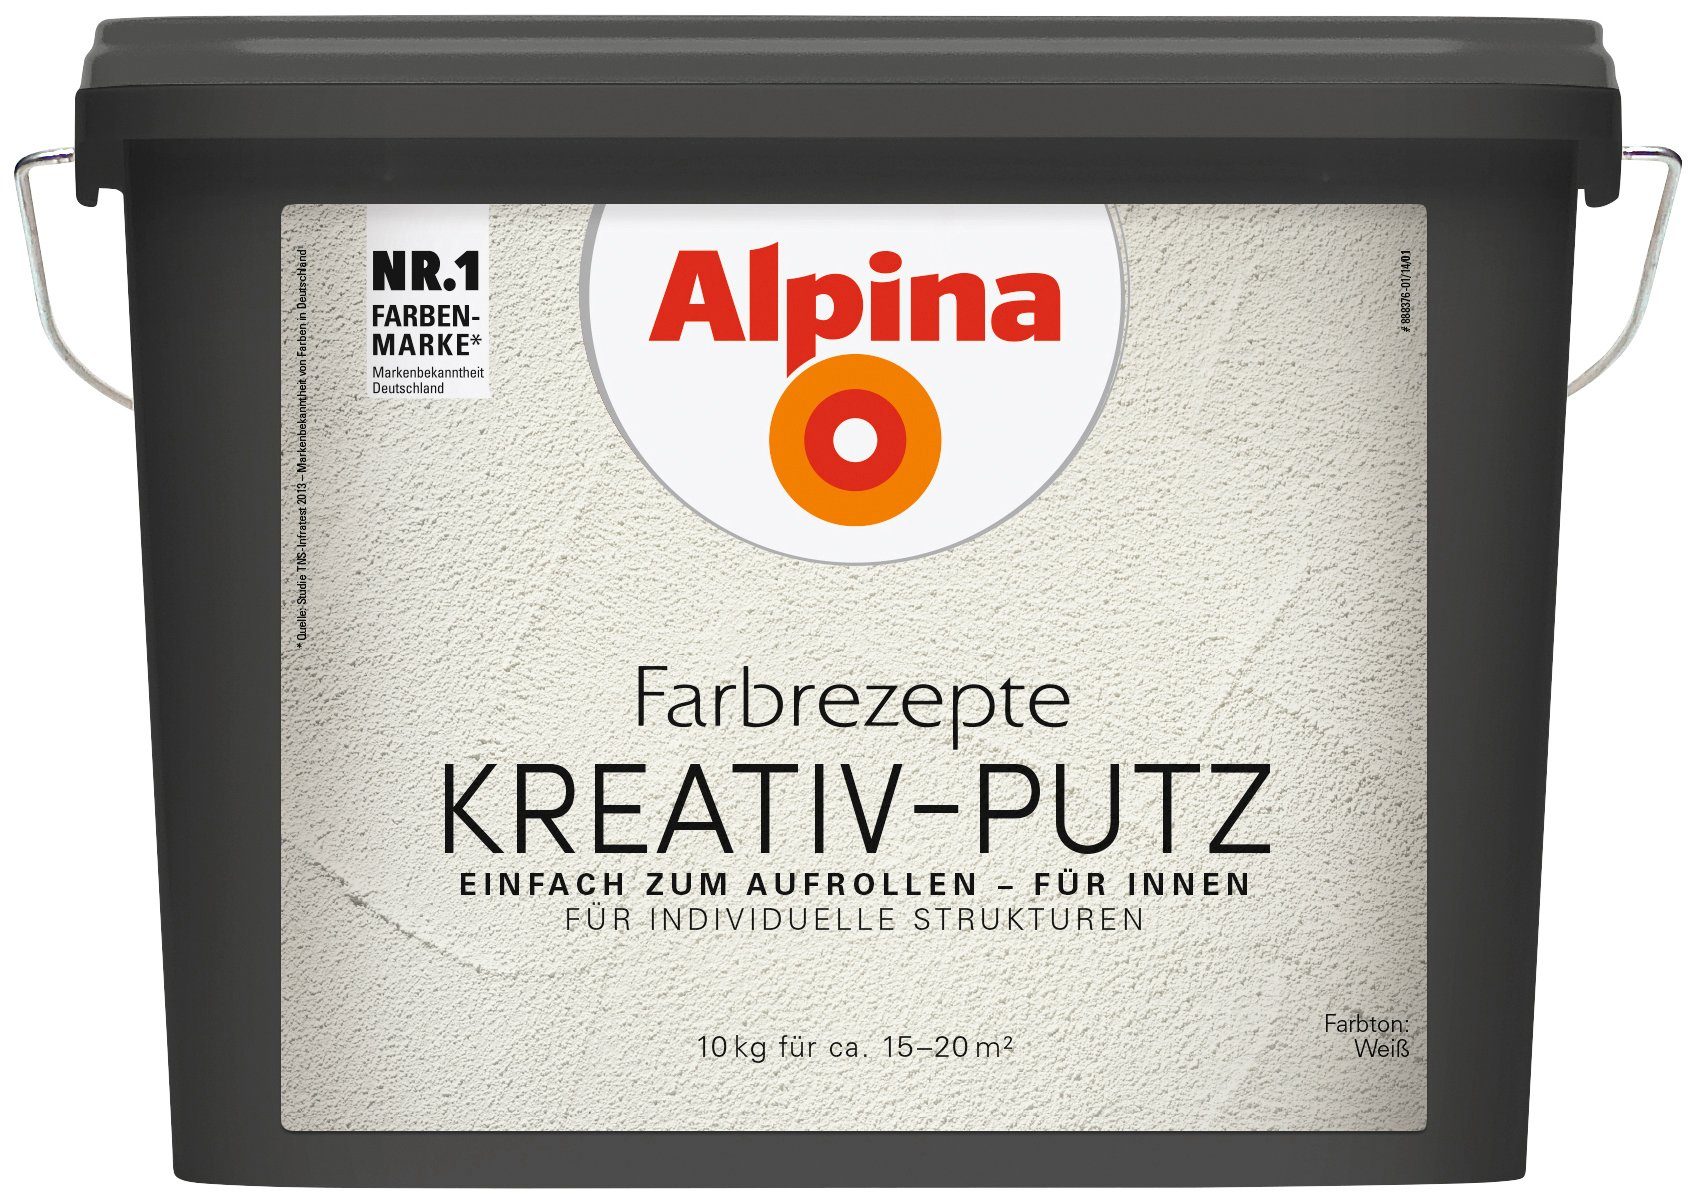 Alpina Kunstharzputz Farbrezepte - Kreativ-Putz kg 10 weiß